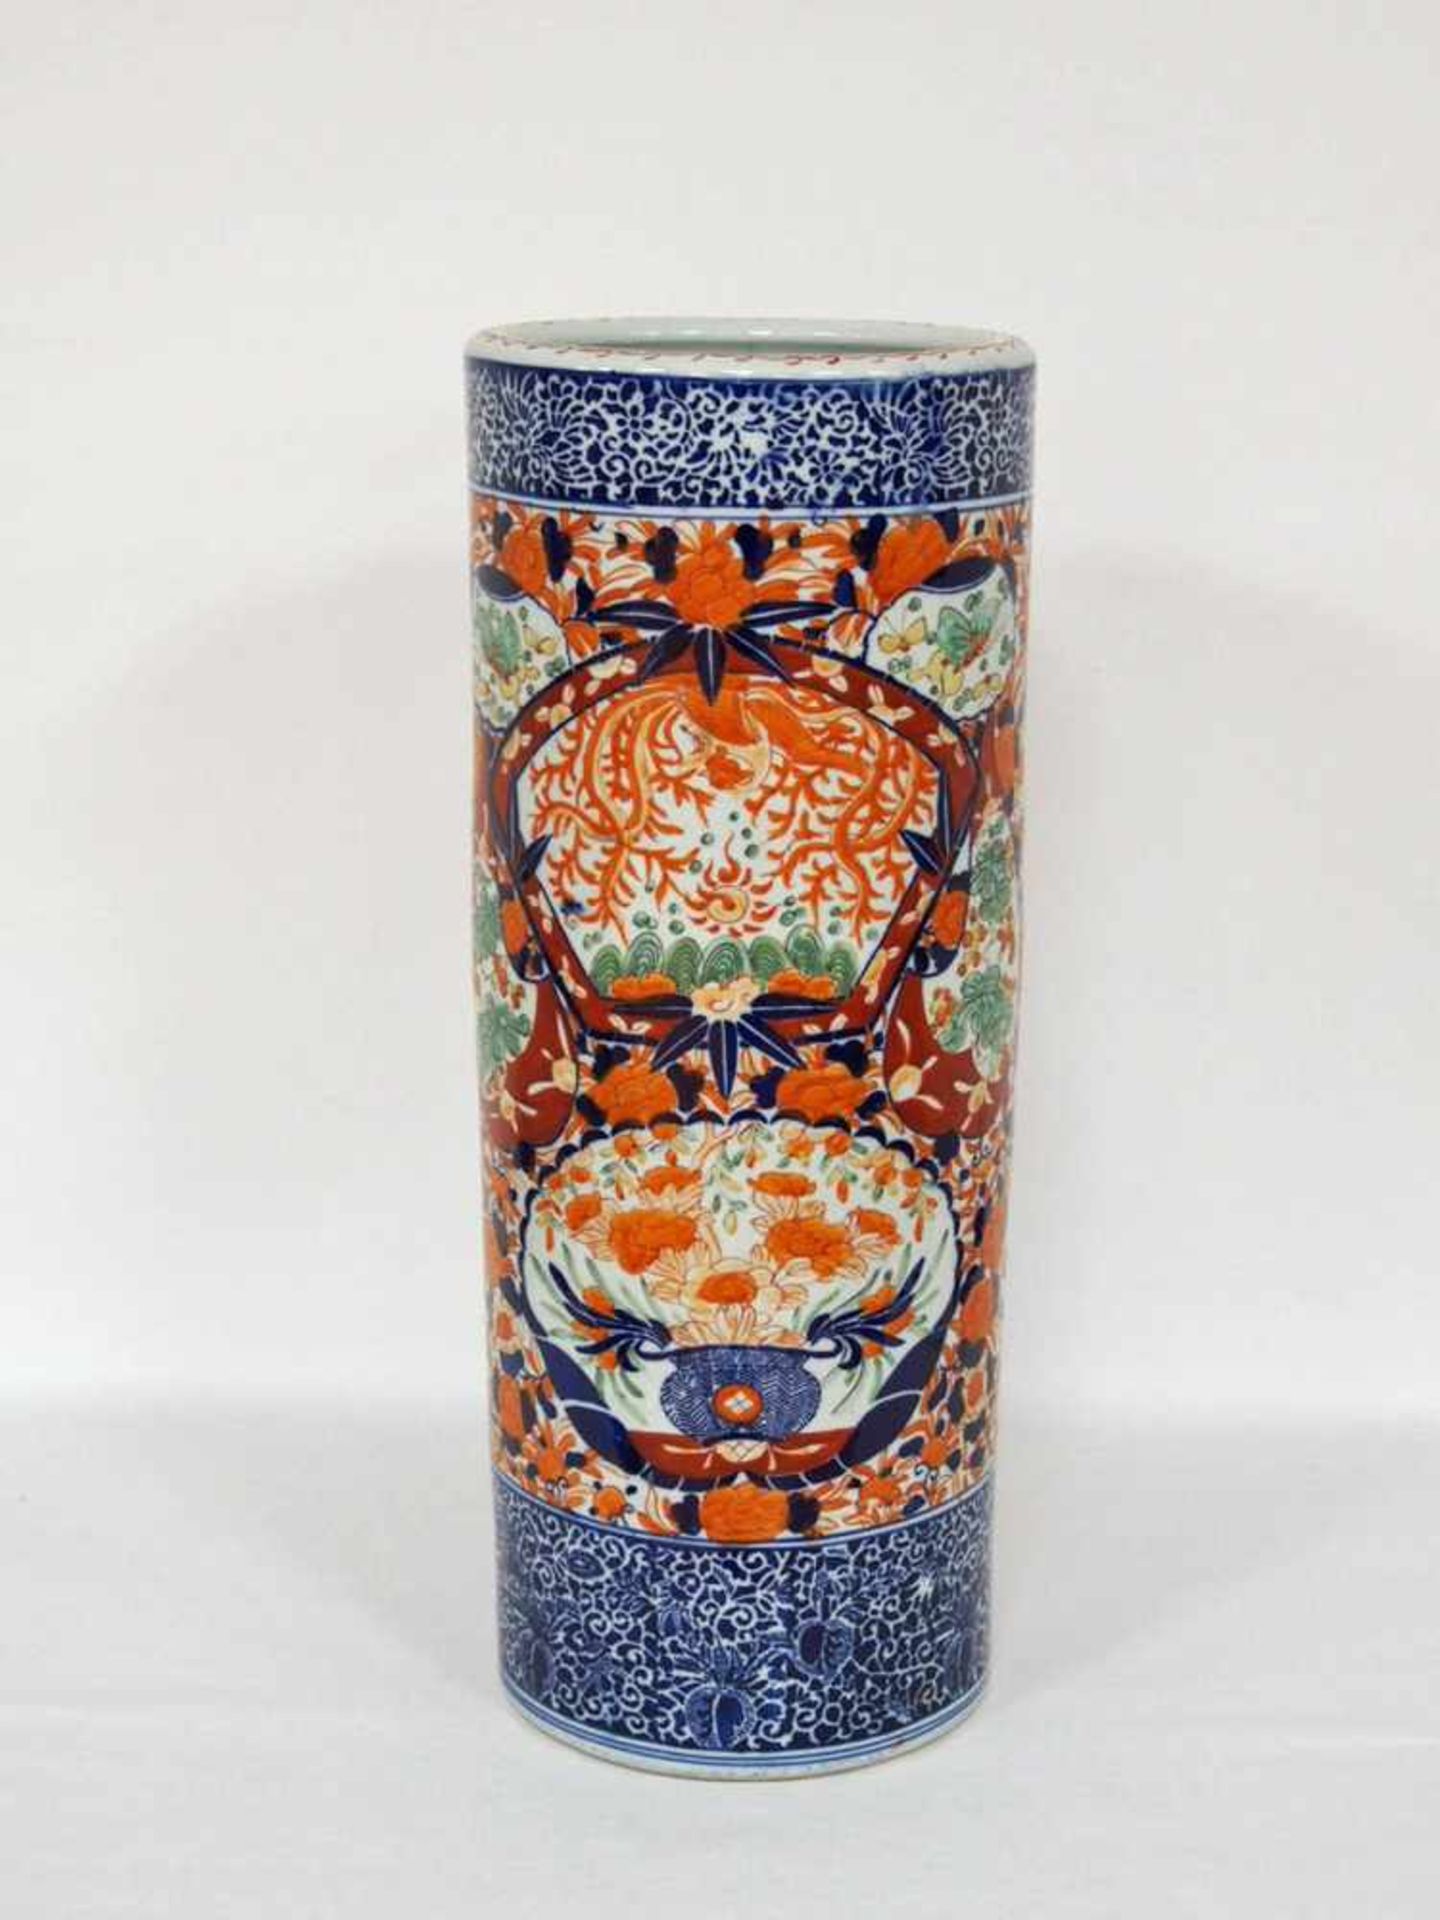 Hohe ZylindervasePorzellan, Imari-Dekor, China um 1900, Höhe 62 cm